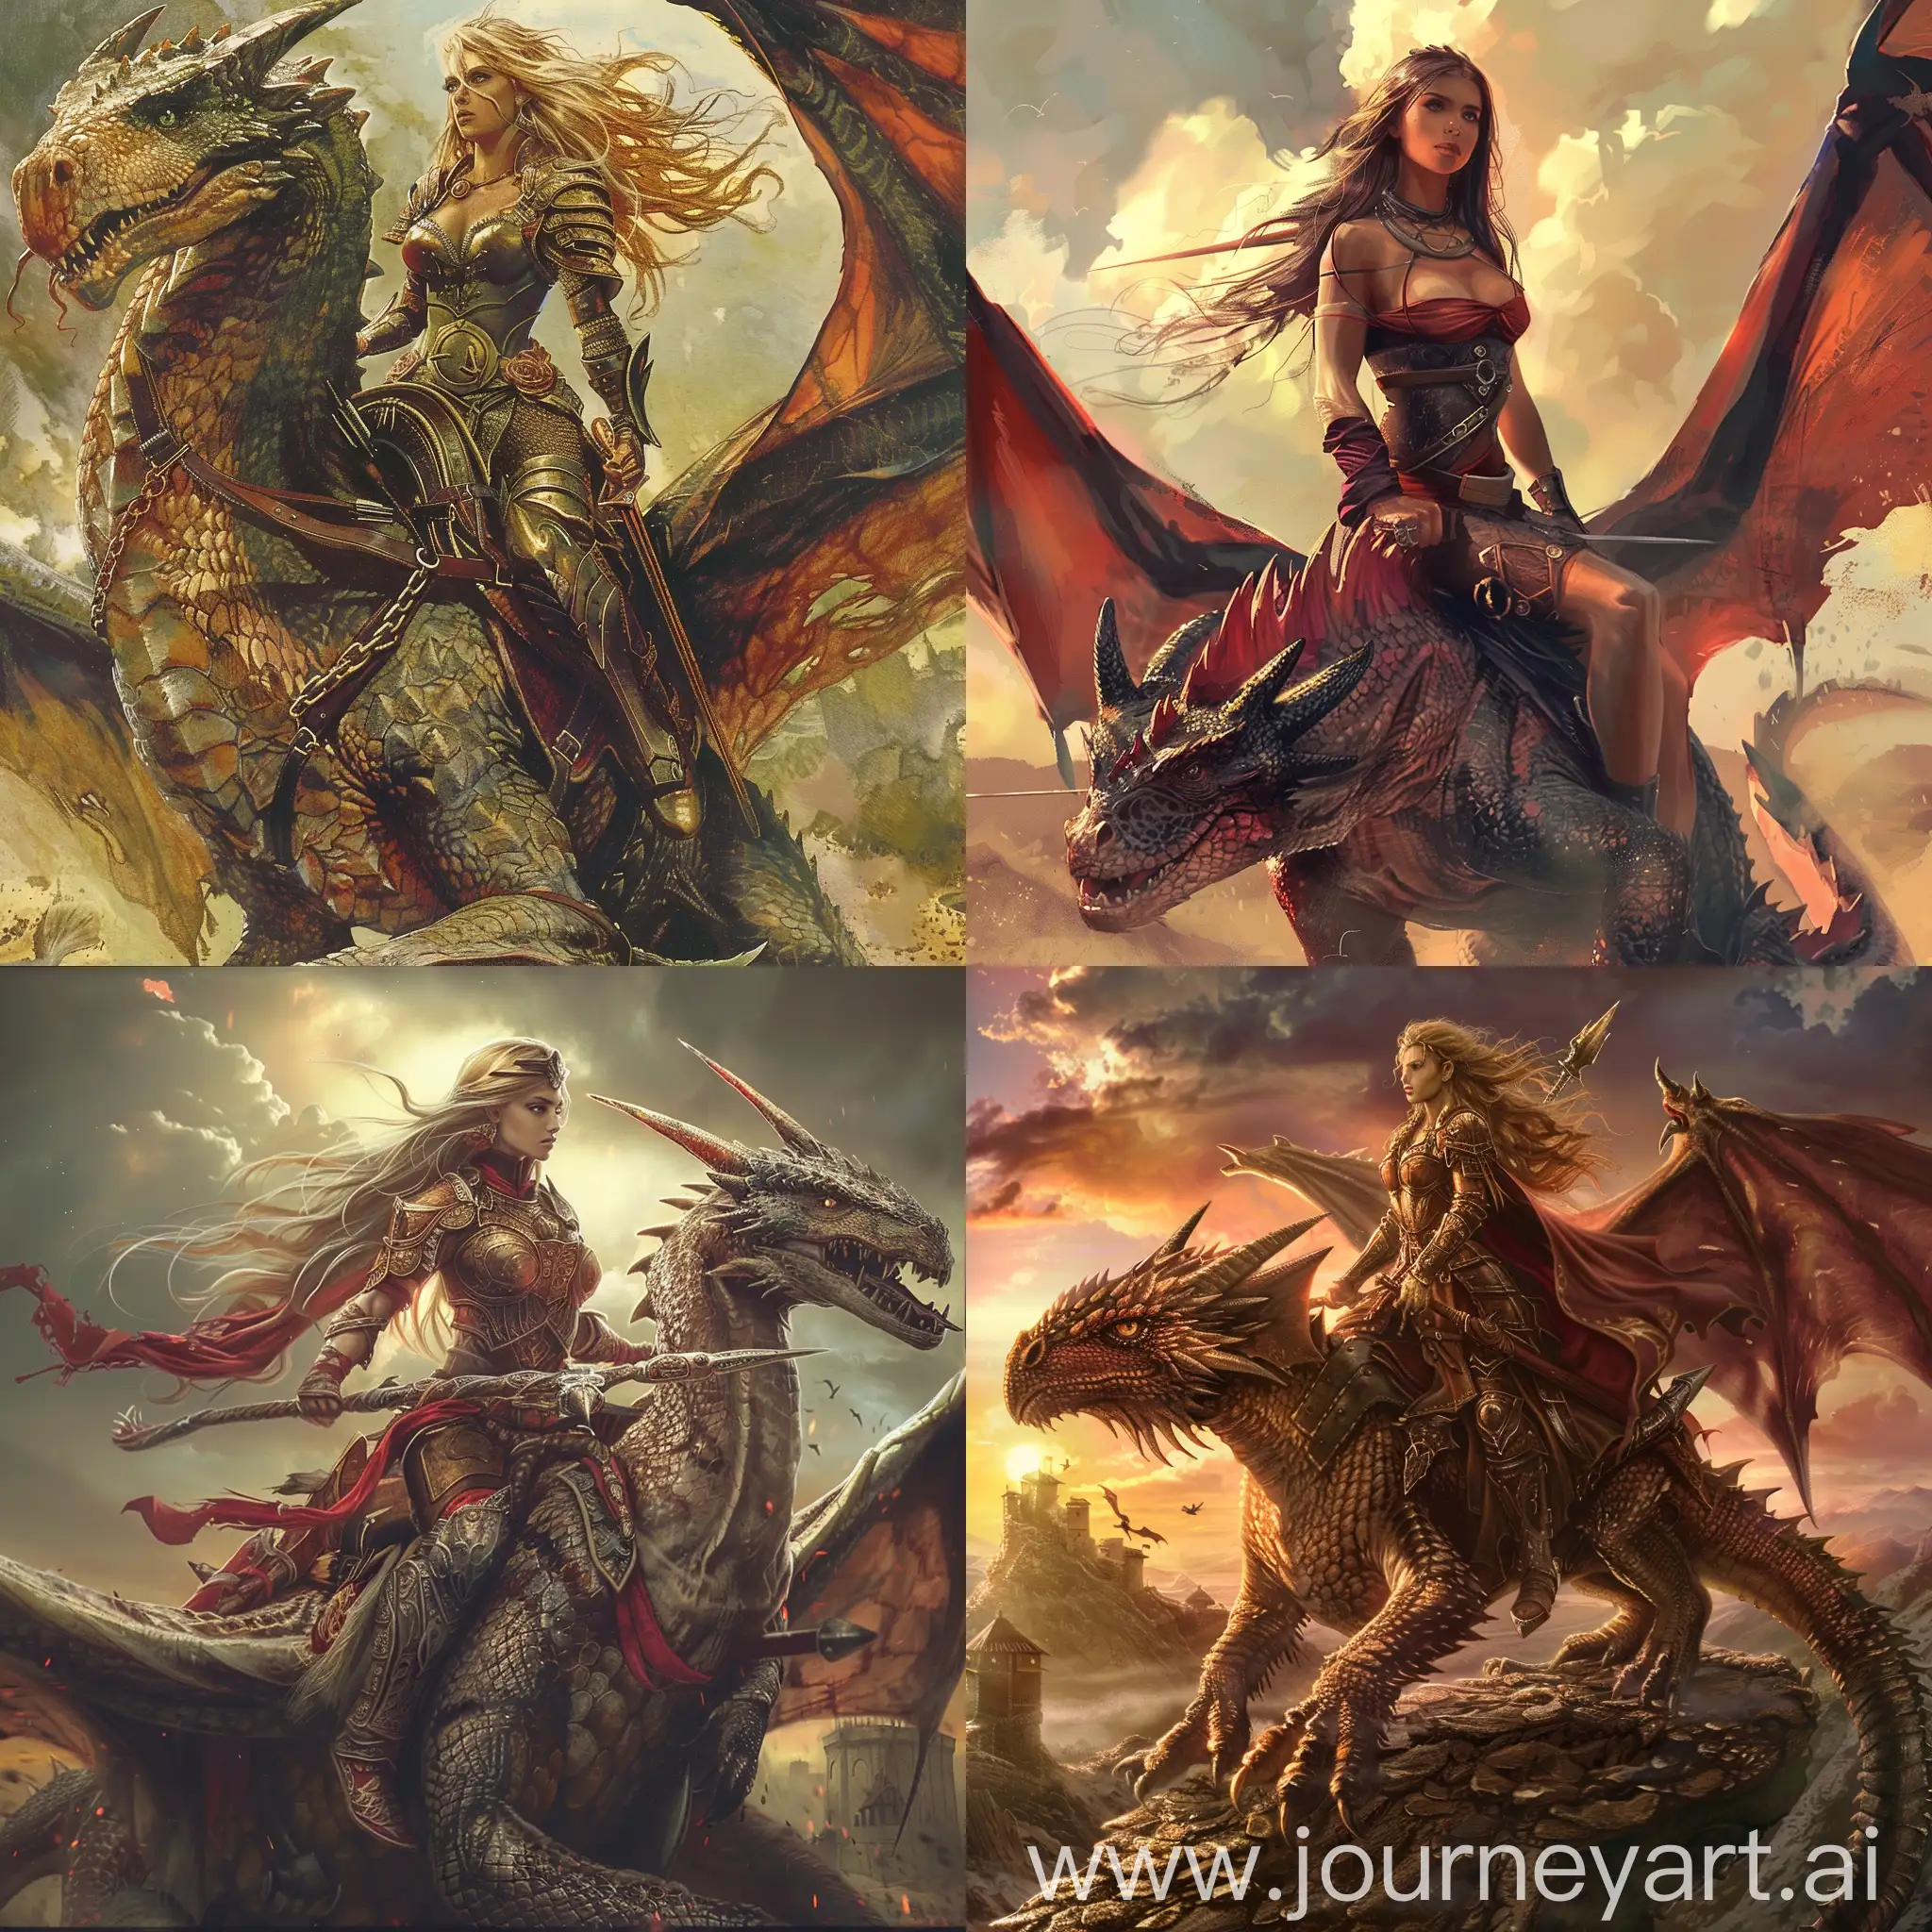 Fearless-Warrior-Maiden-Riding-Majestic-Dragon-Art